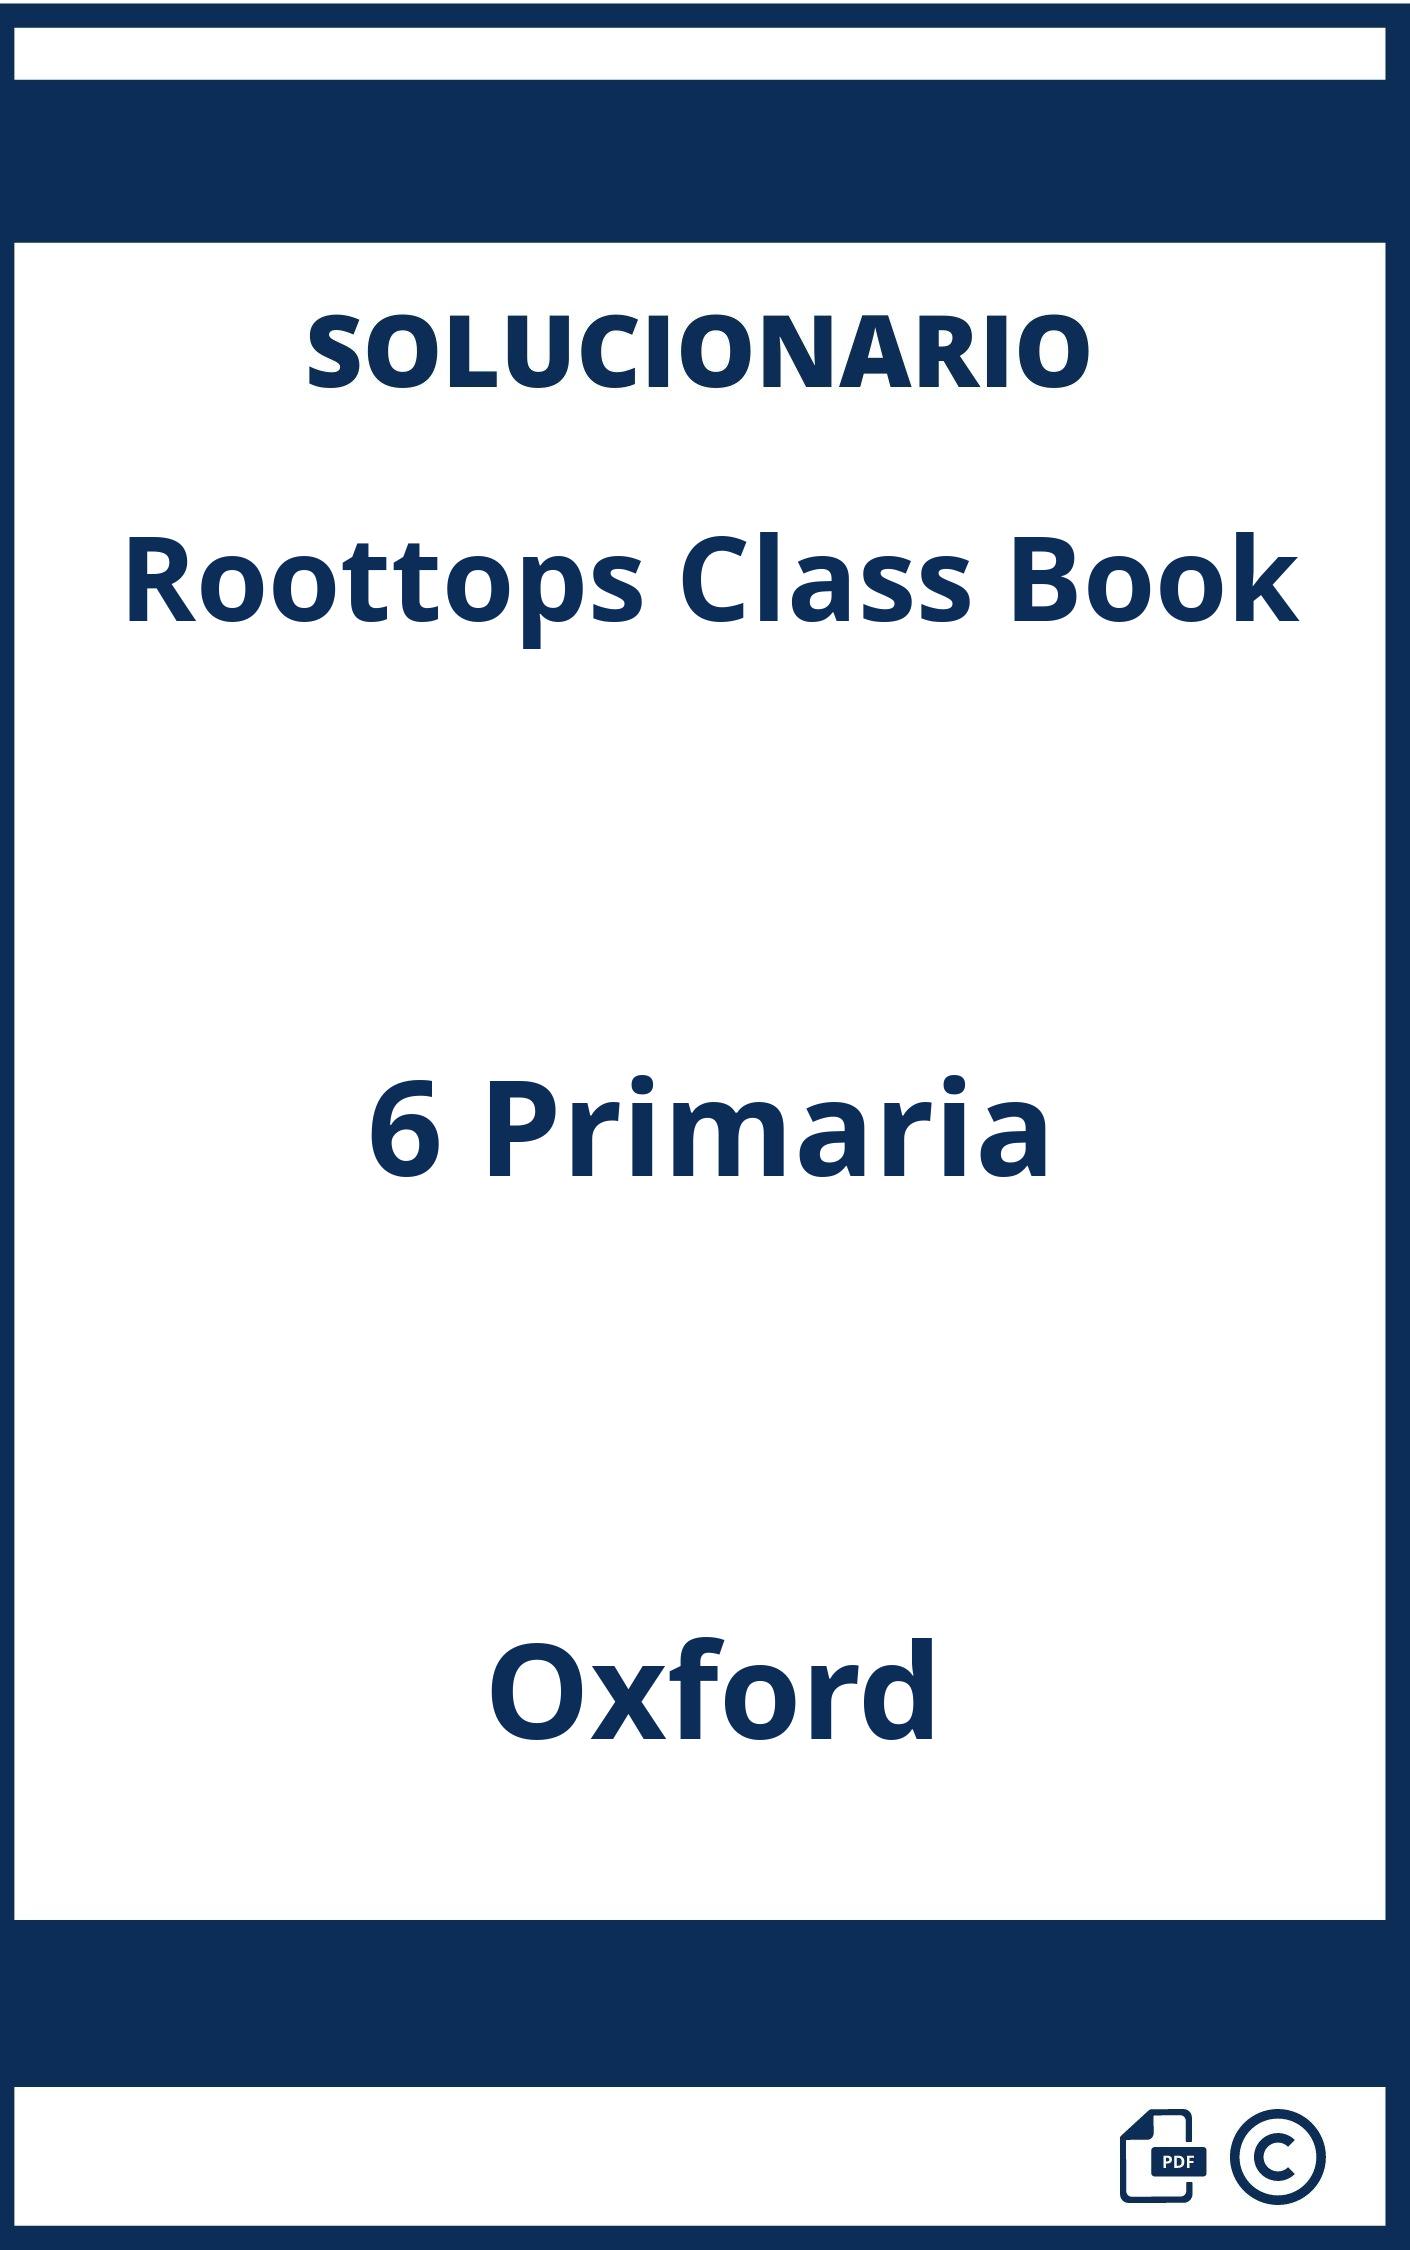 Solucionario Roottops Class Book 6 Primaria Oxford